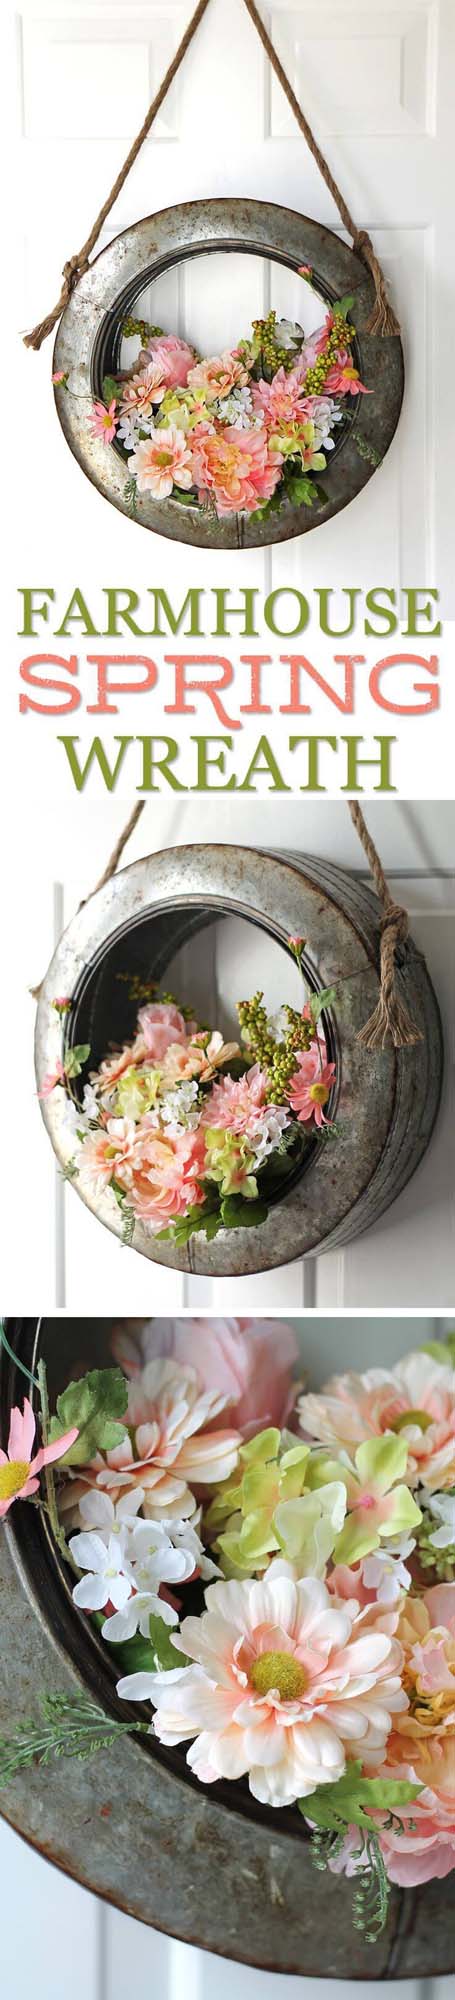 Unique Metal Wreath with Blooming Flowers #springwreath #diy #decorhomeideas